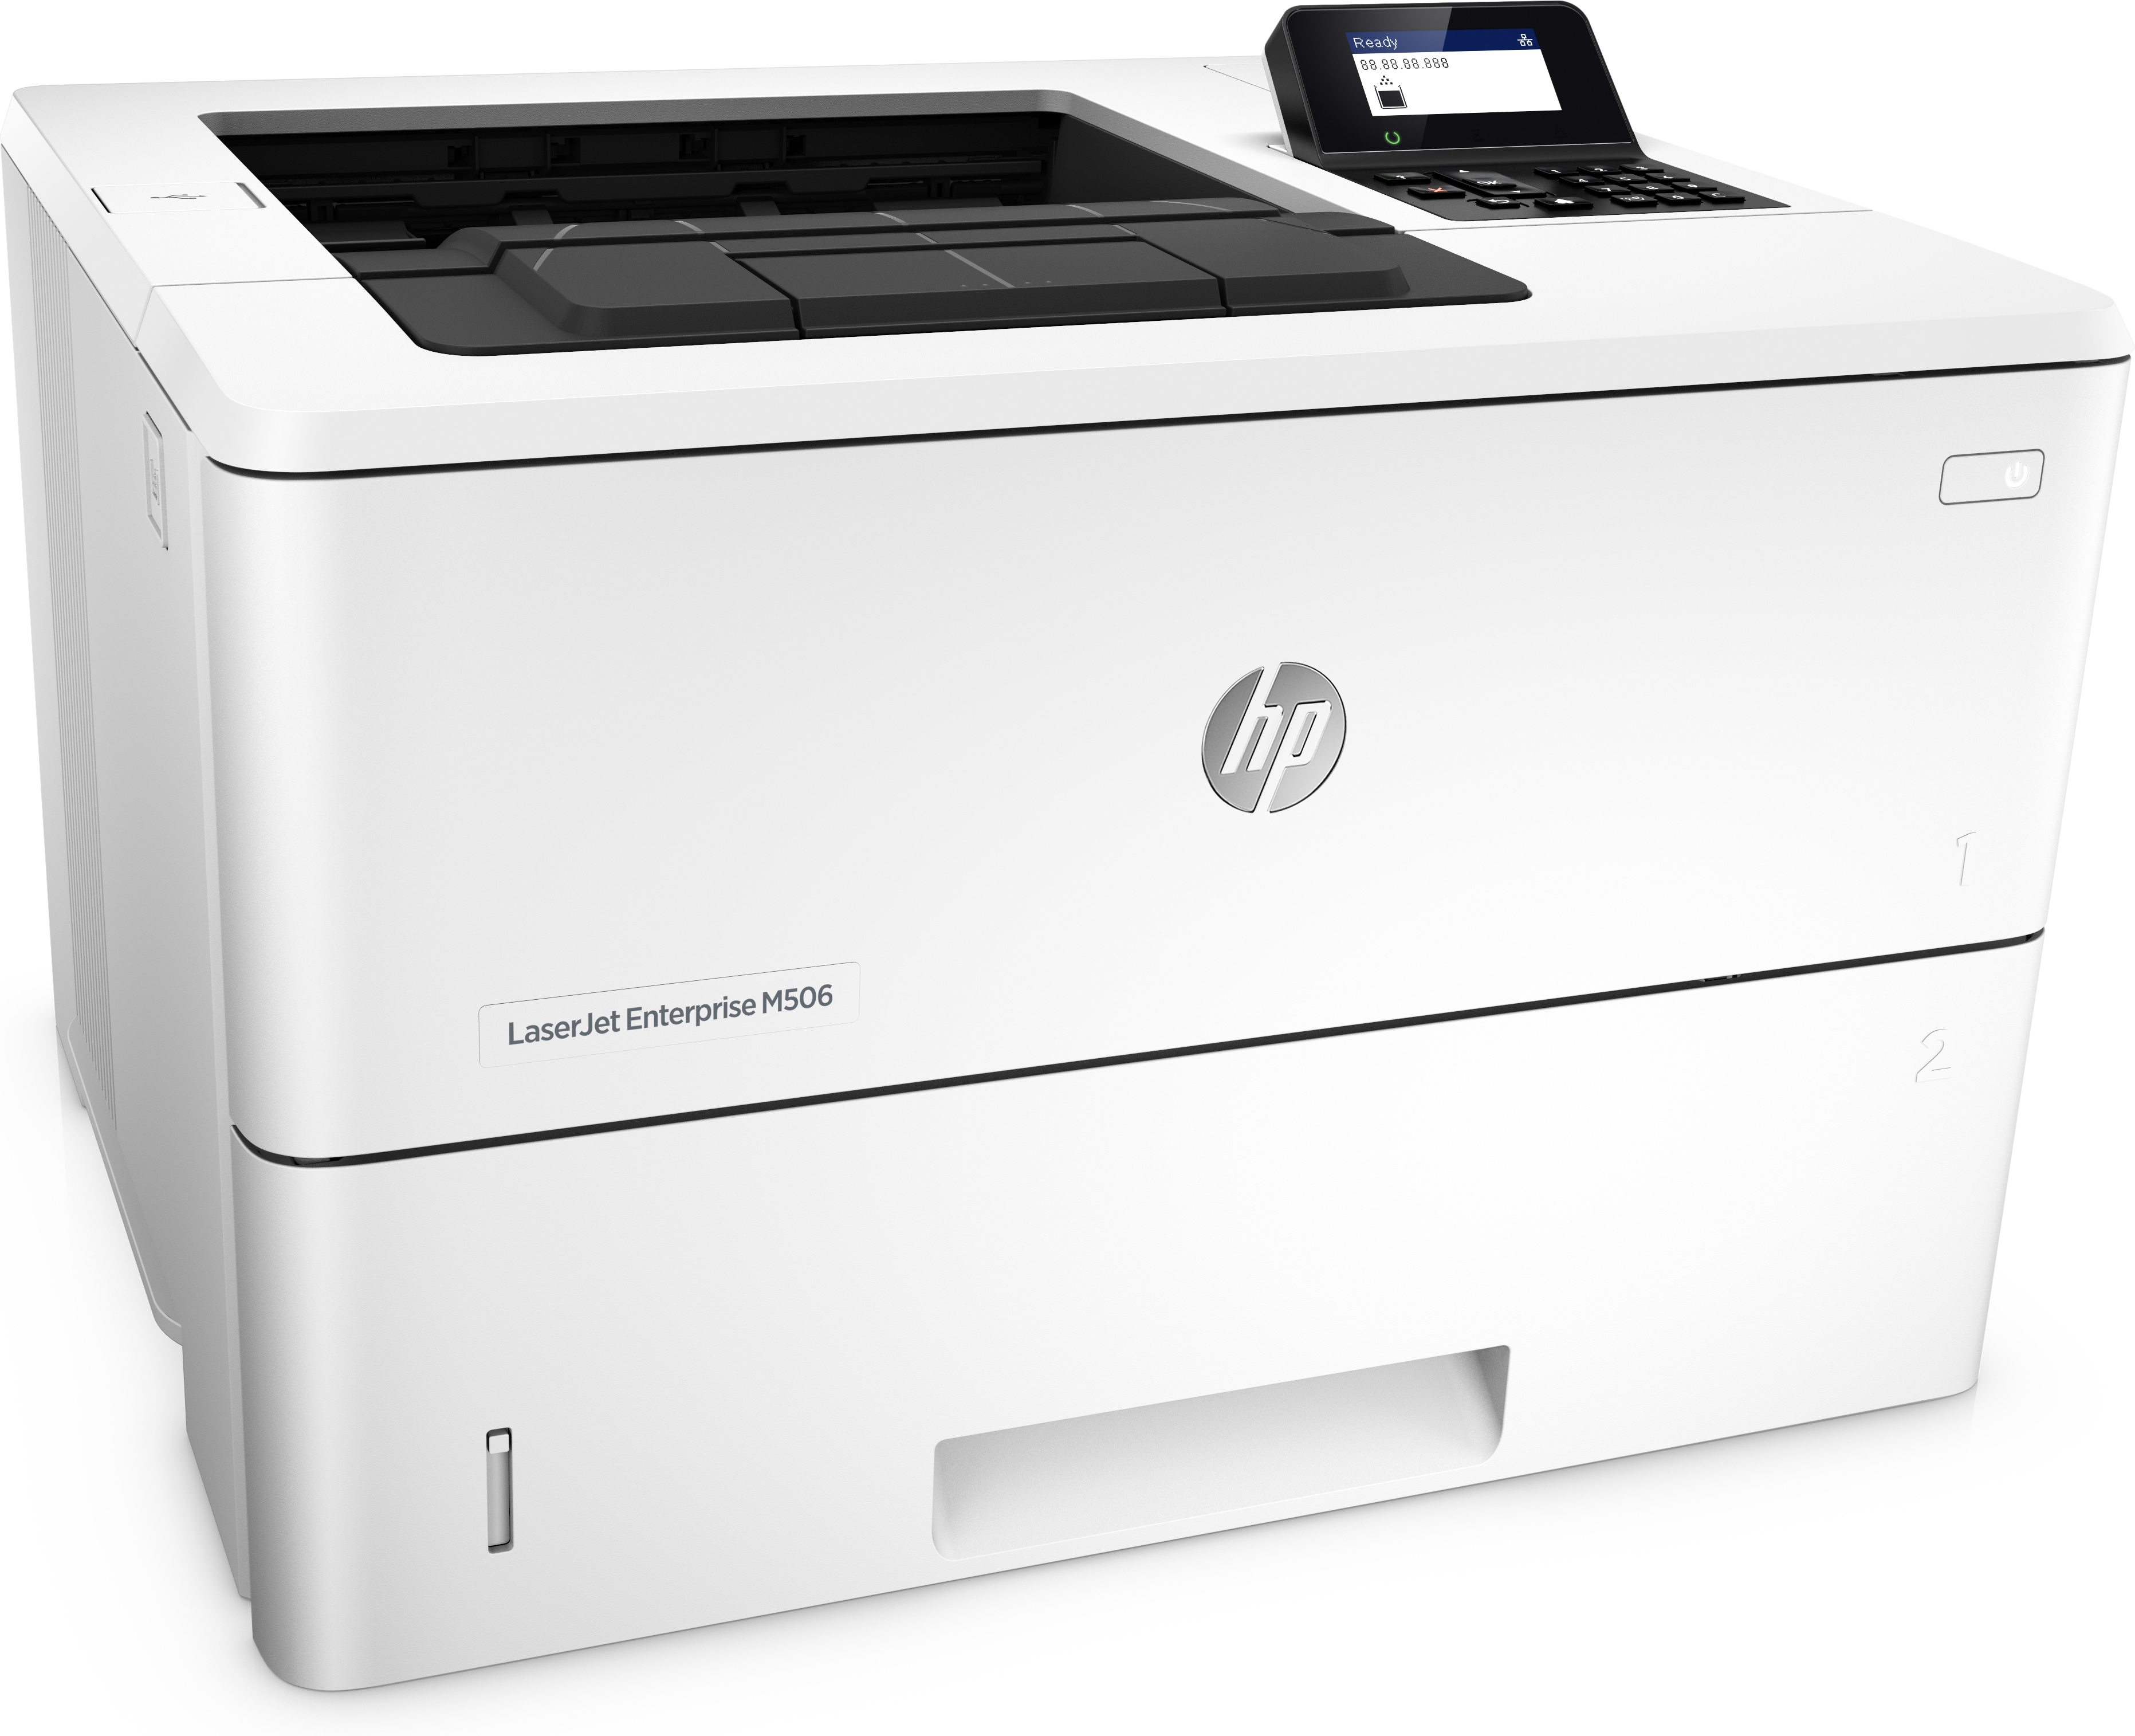 Buy HP Office Paper CHP110 Universal printer paper A4 80 g/m² 500